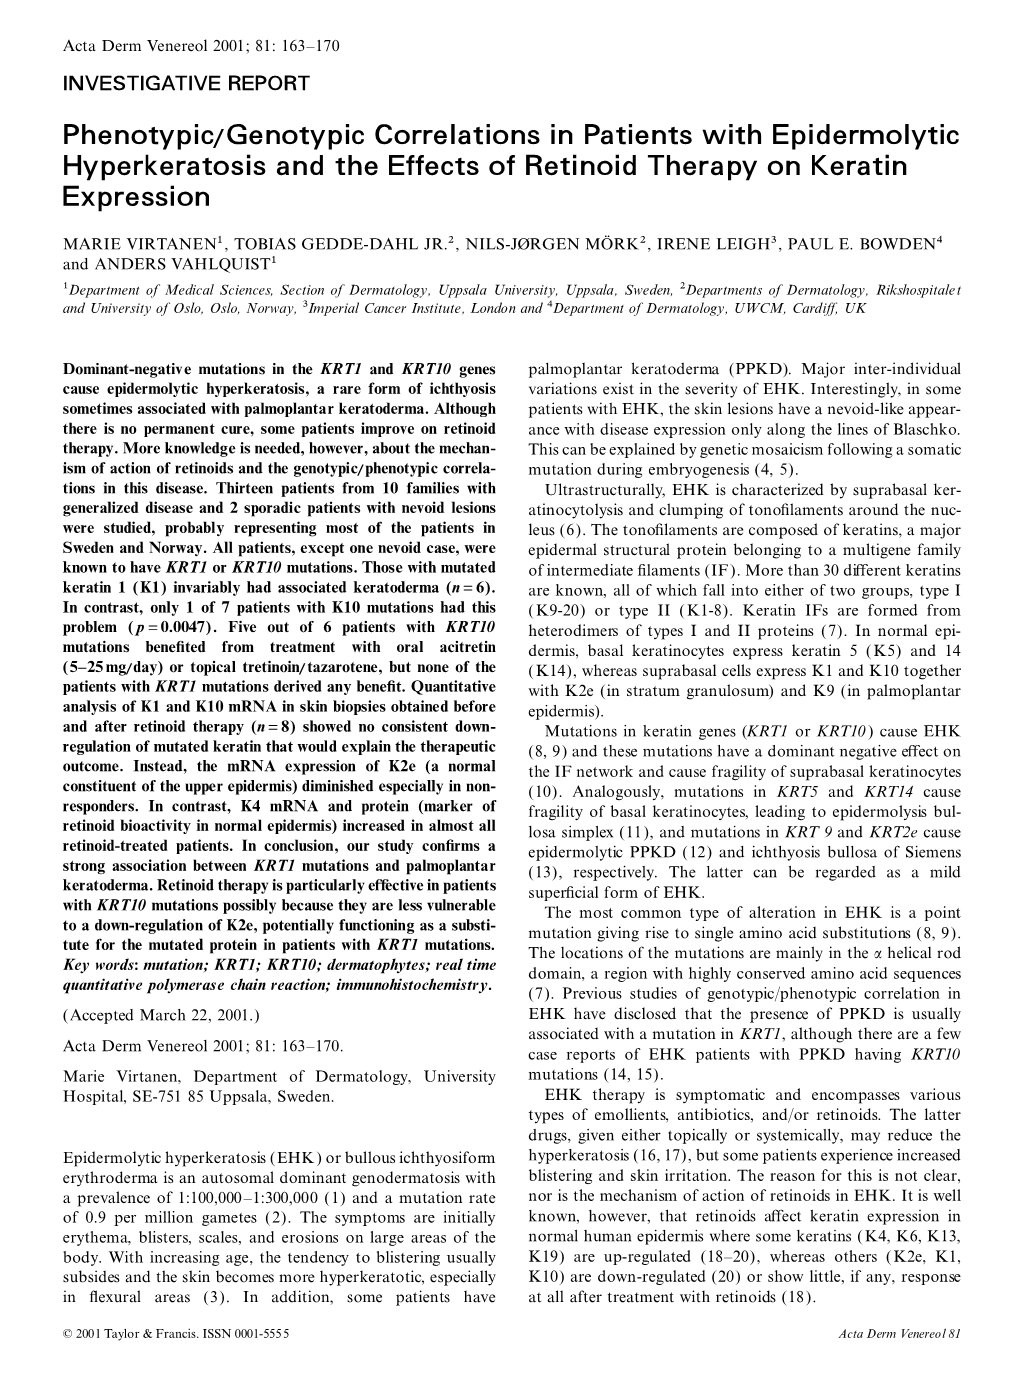 Phenotypic/Genotypic Correlations in Patients with Epidermolytic